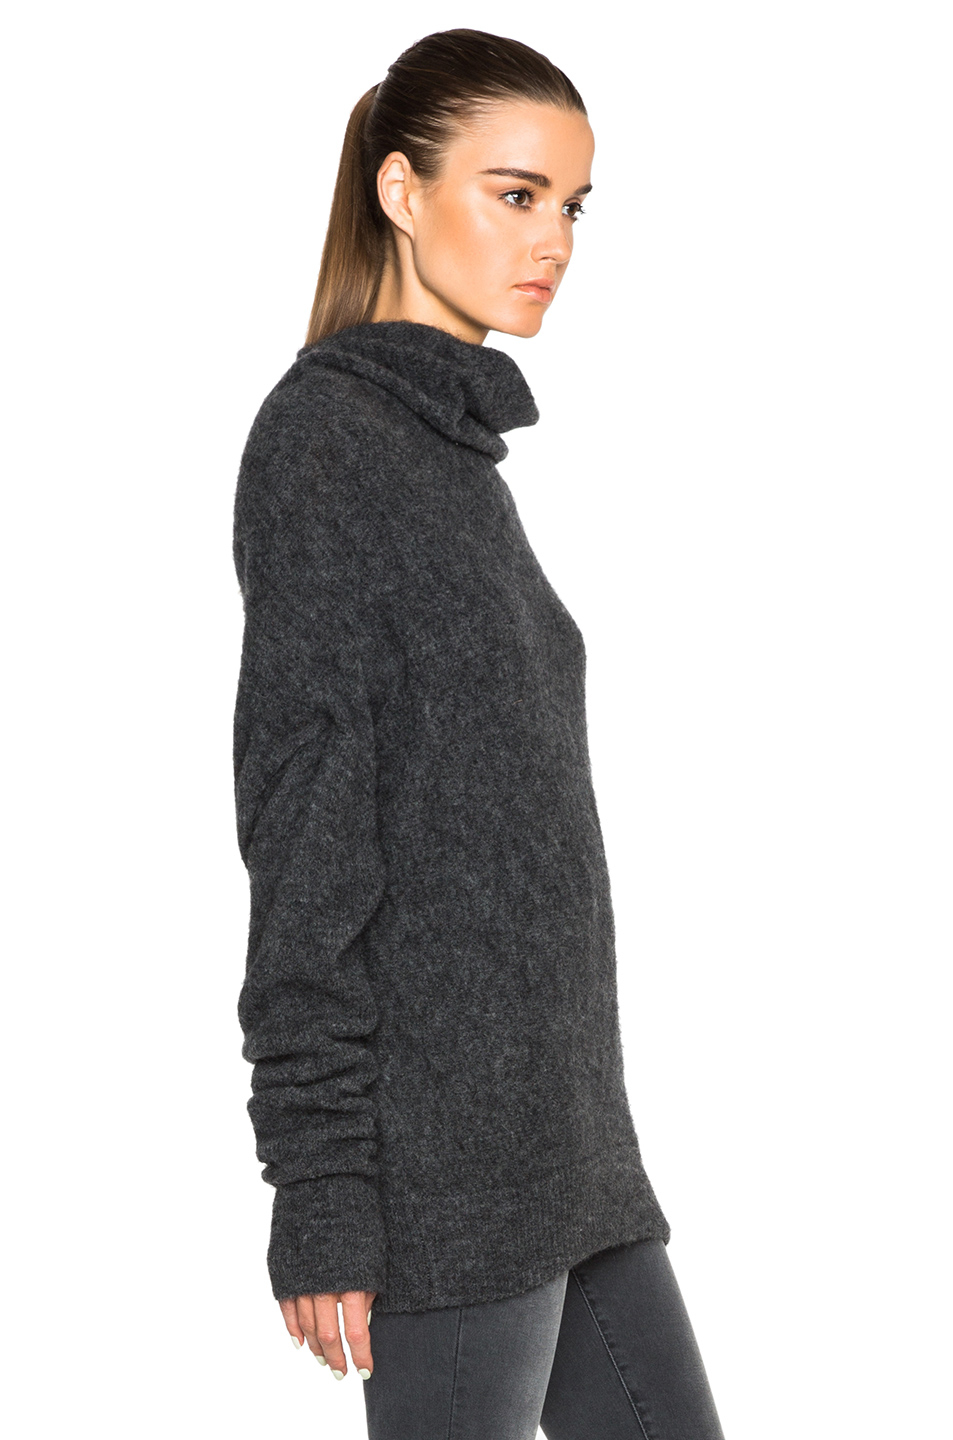 Acne Studios Vendome Drape Mohair Sweater in Dark Grey Melange (Gray) - Lyst